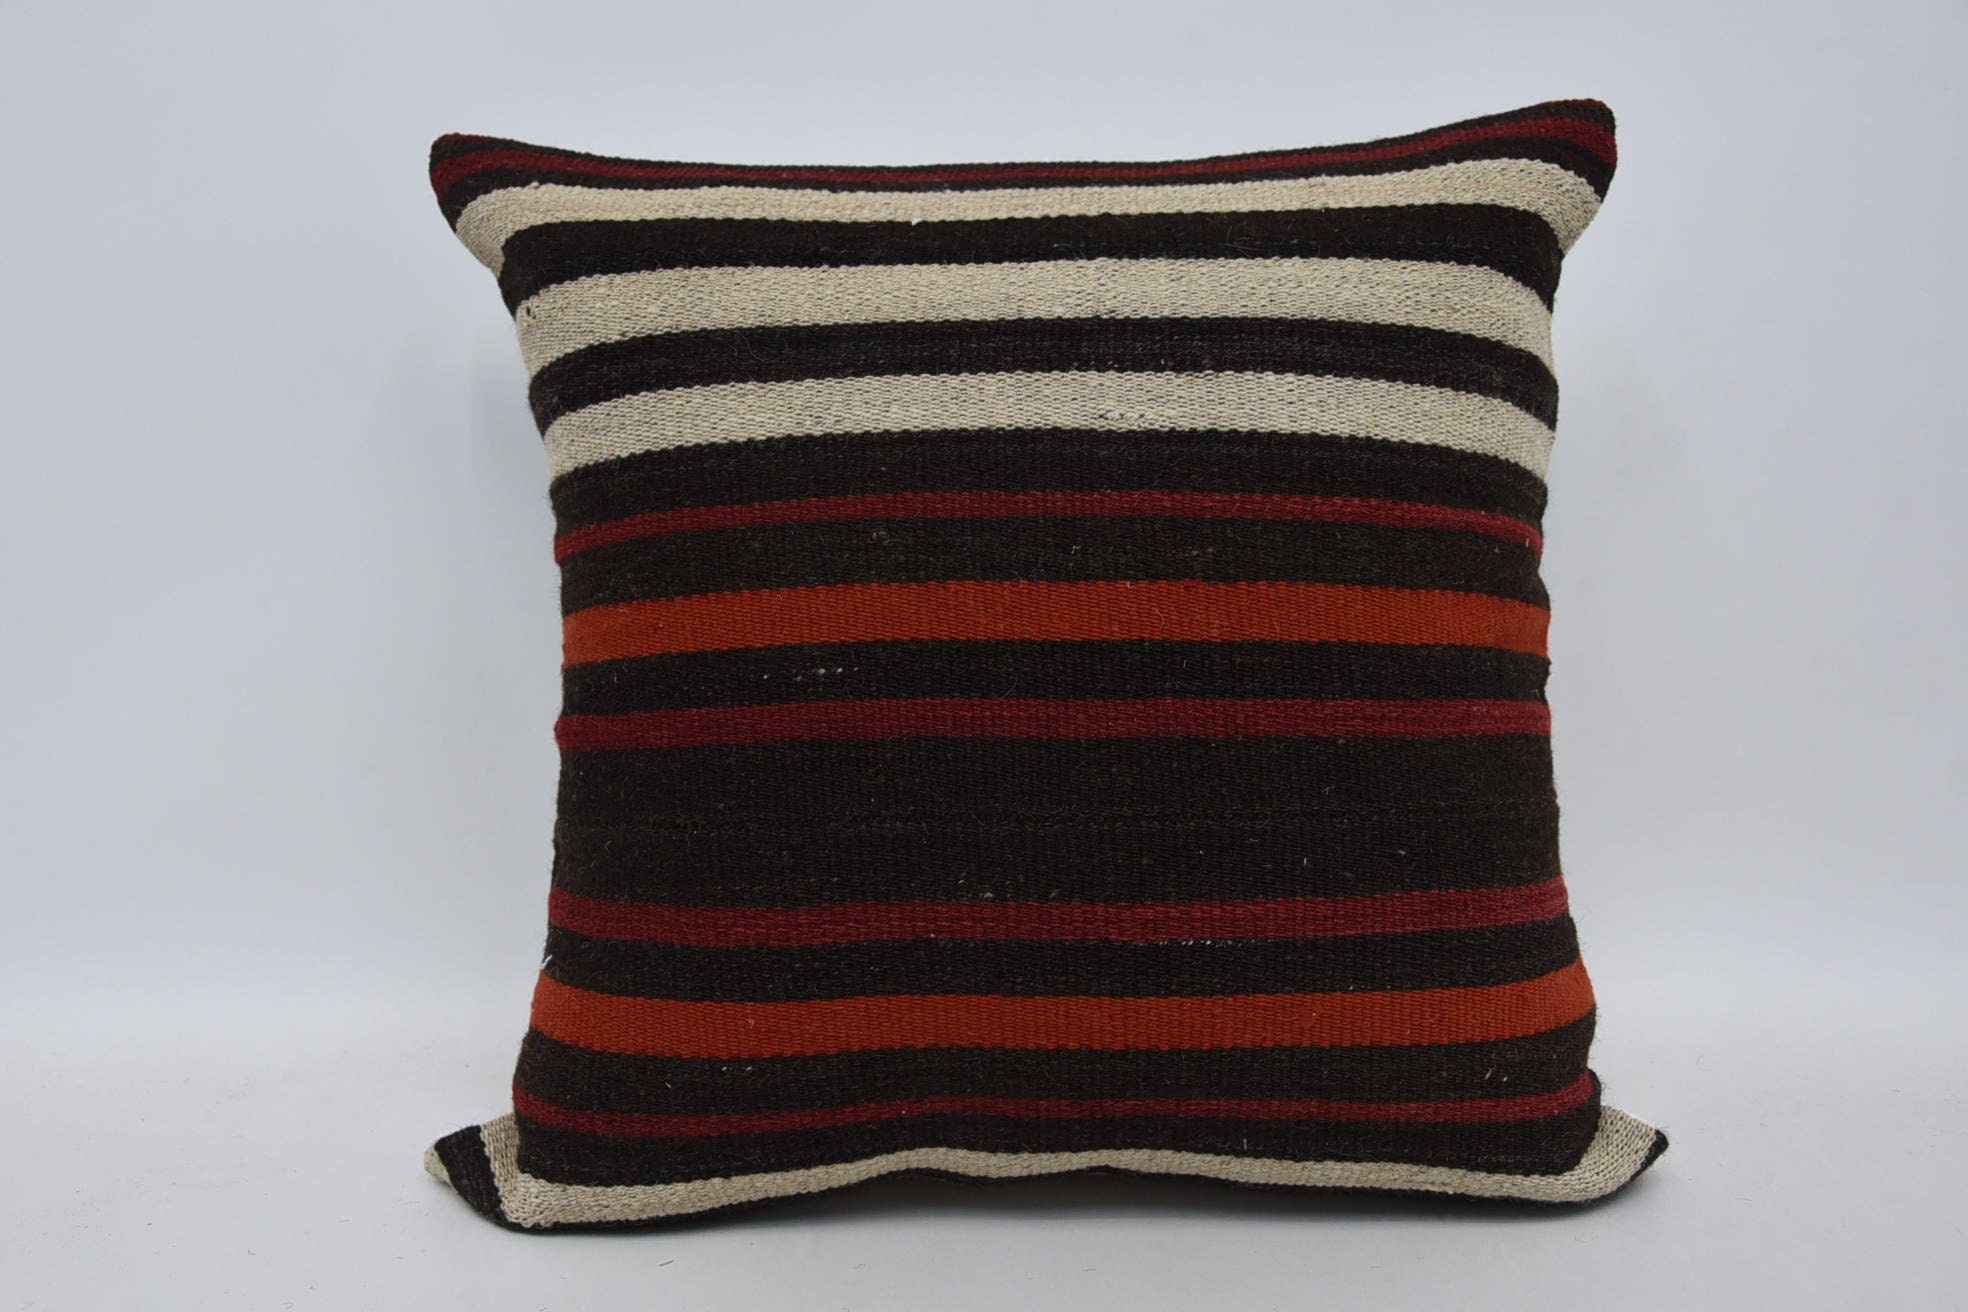 Ethnical Kilim Rug Pillow, Kilim Pillow, Ikat Pillow, Nomadic Cushion Cover, Throw Kilim Pillow, 18"x18" Brown Pillow Cover